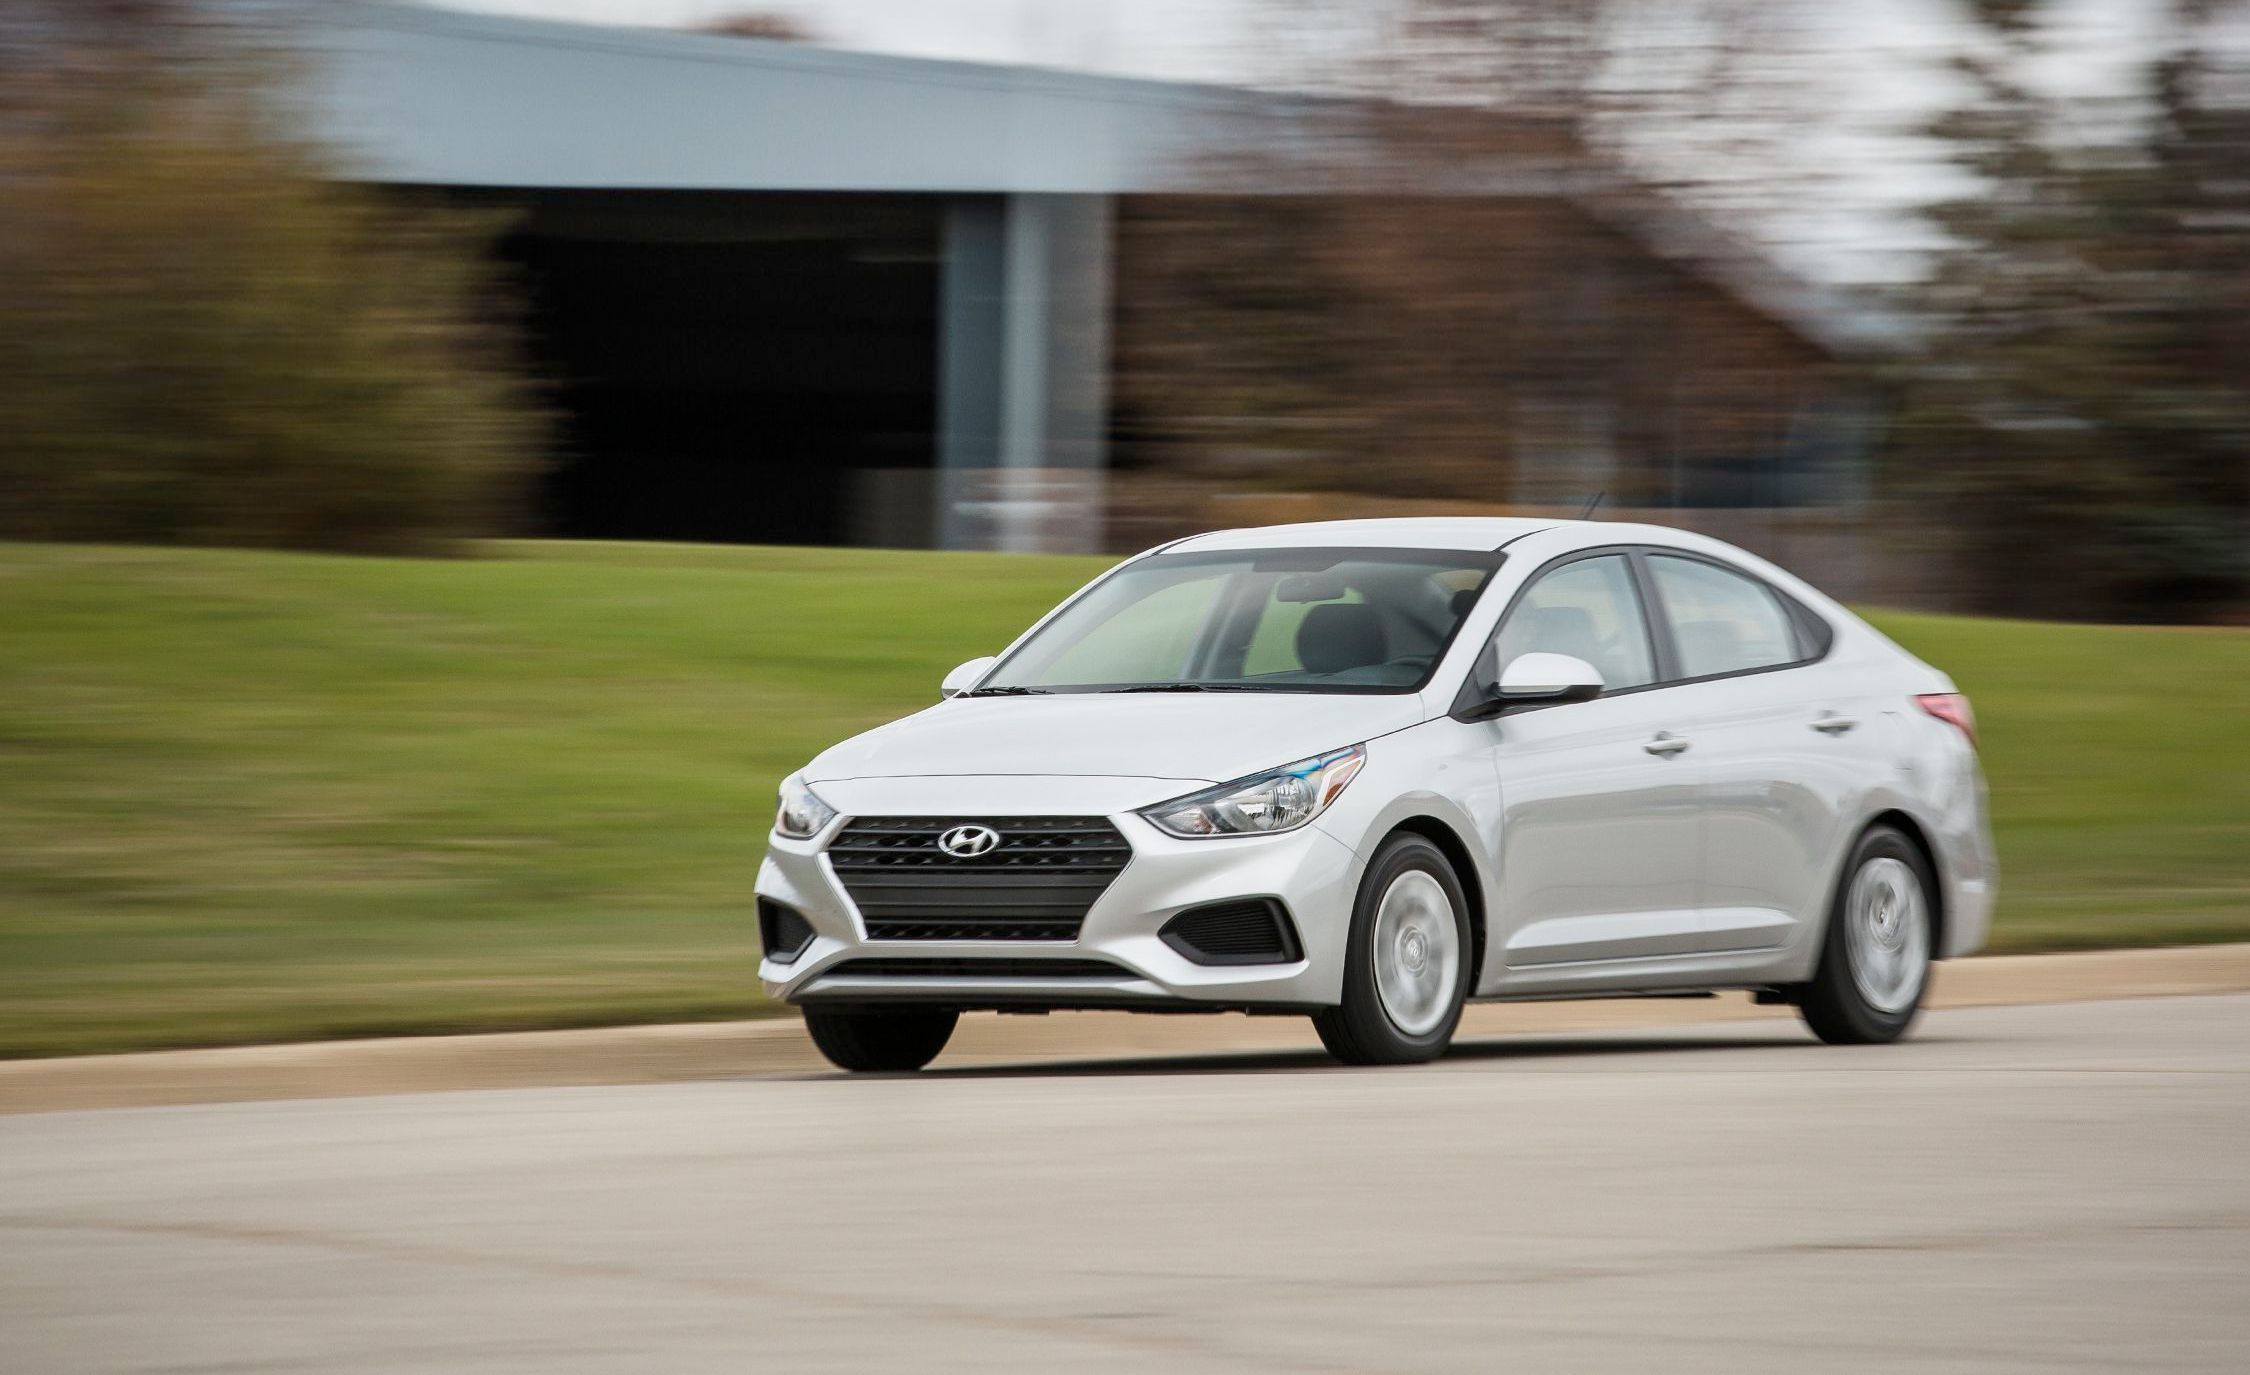 Hyundai Accent Reliability: Is It A Good Car?